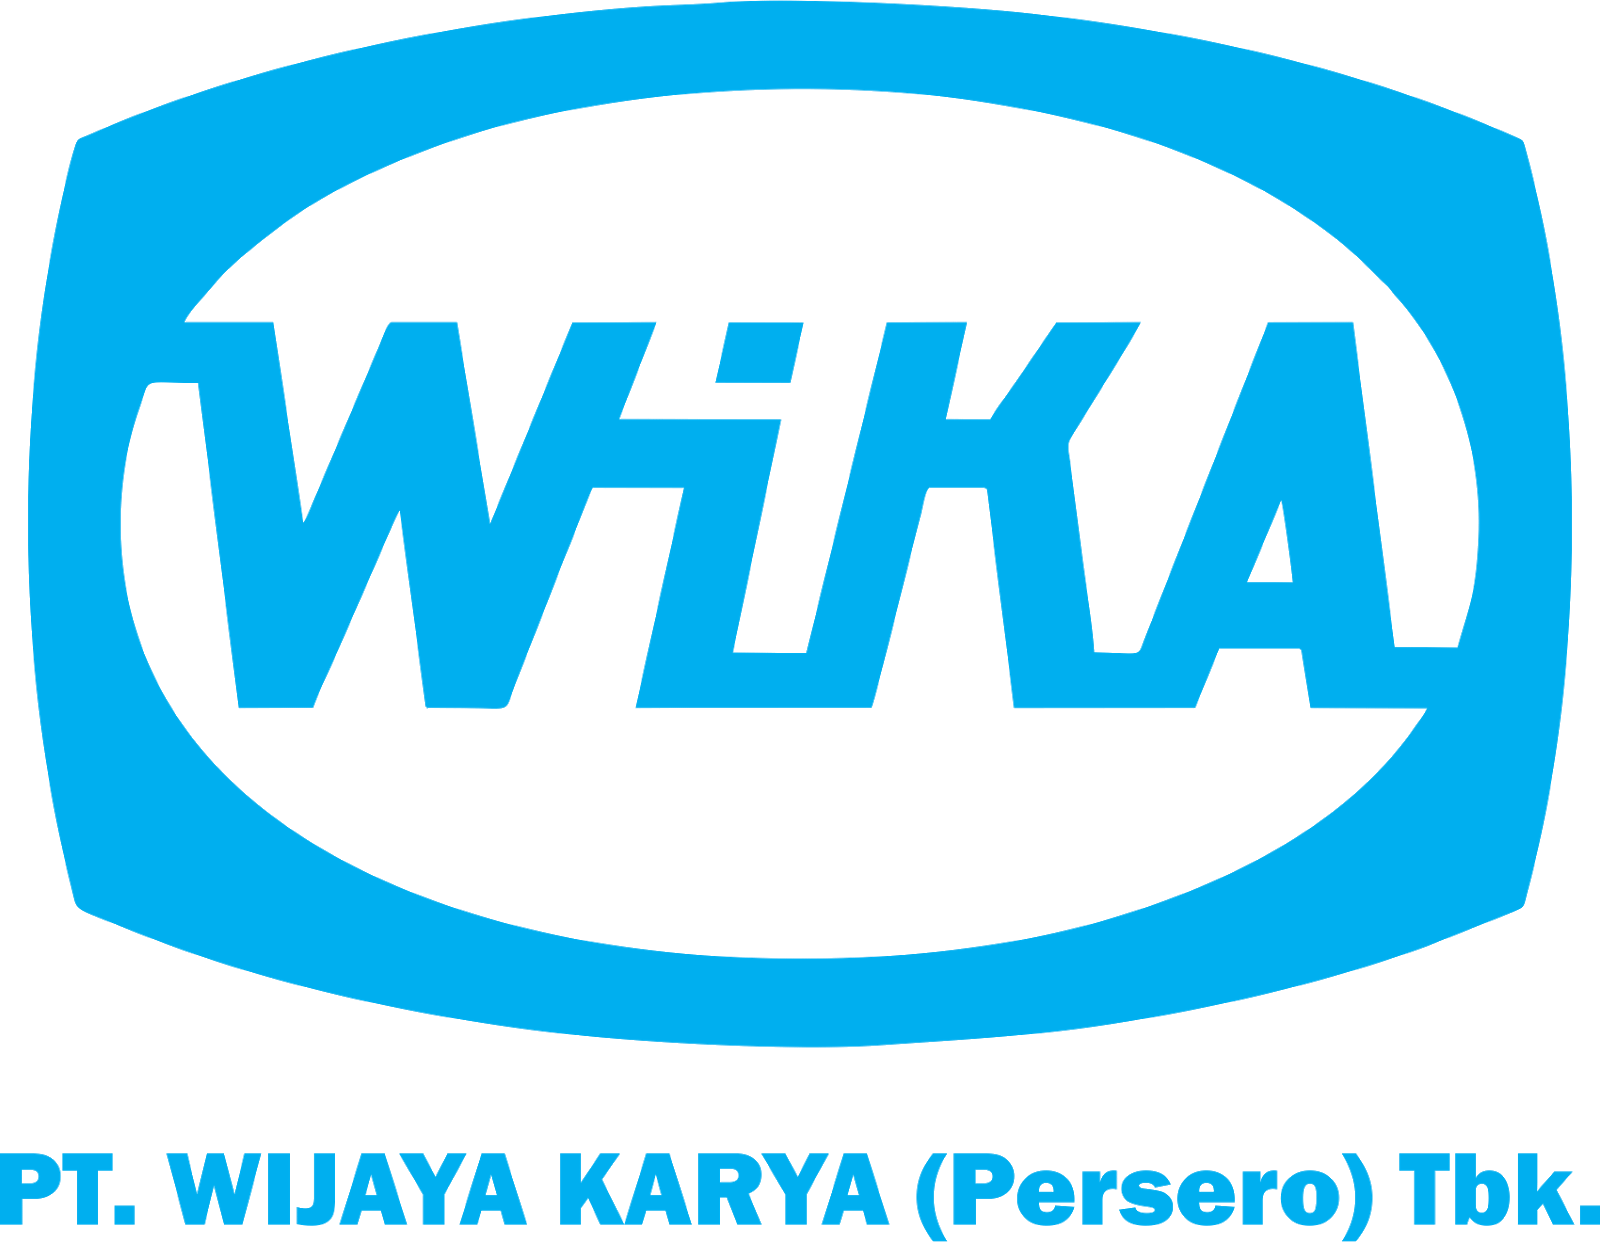 Logotype vs Logomark: Large Indonesian construction company Wika uses a logotype for their main logo.